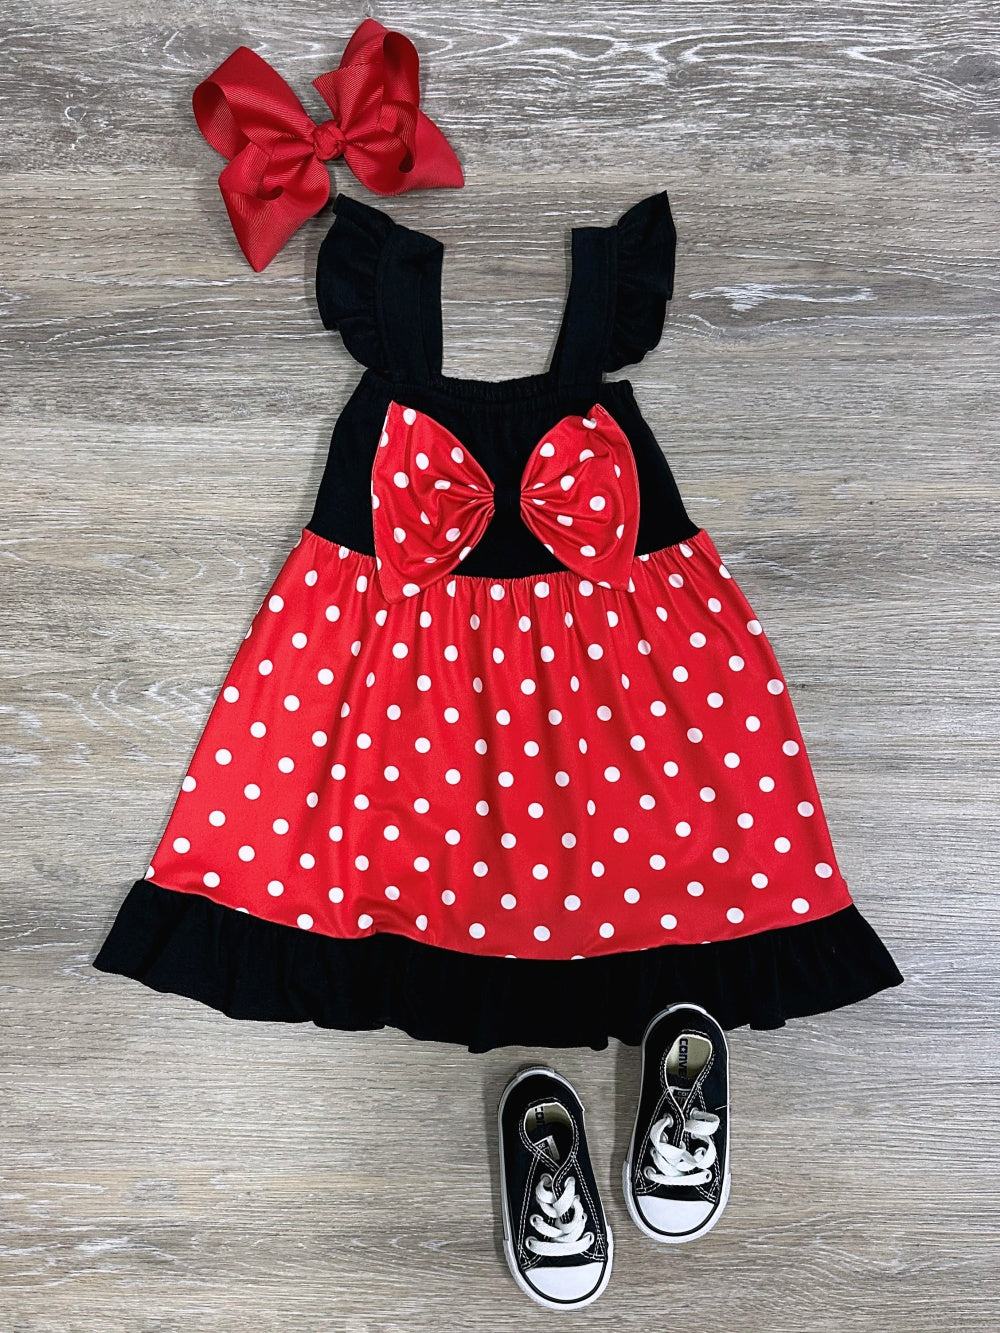 Princess Dress Up - Polka Dot Mouse